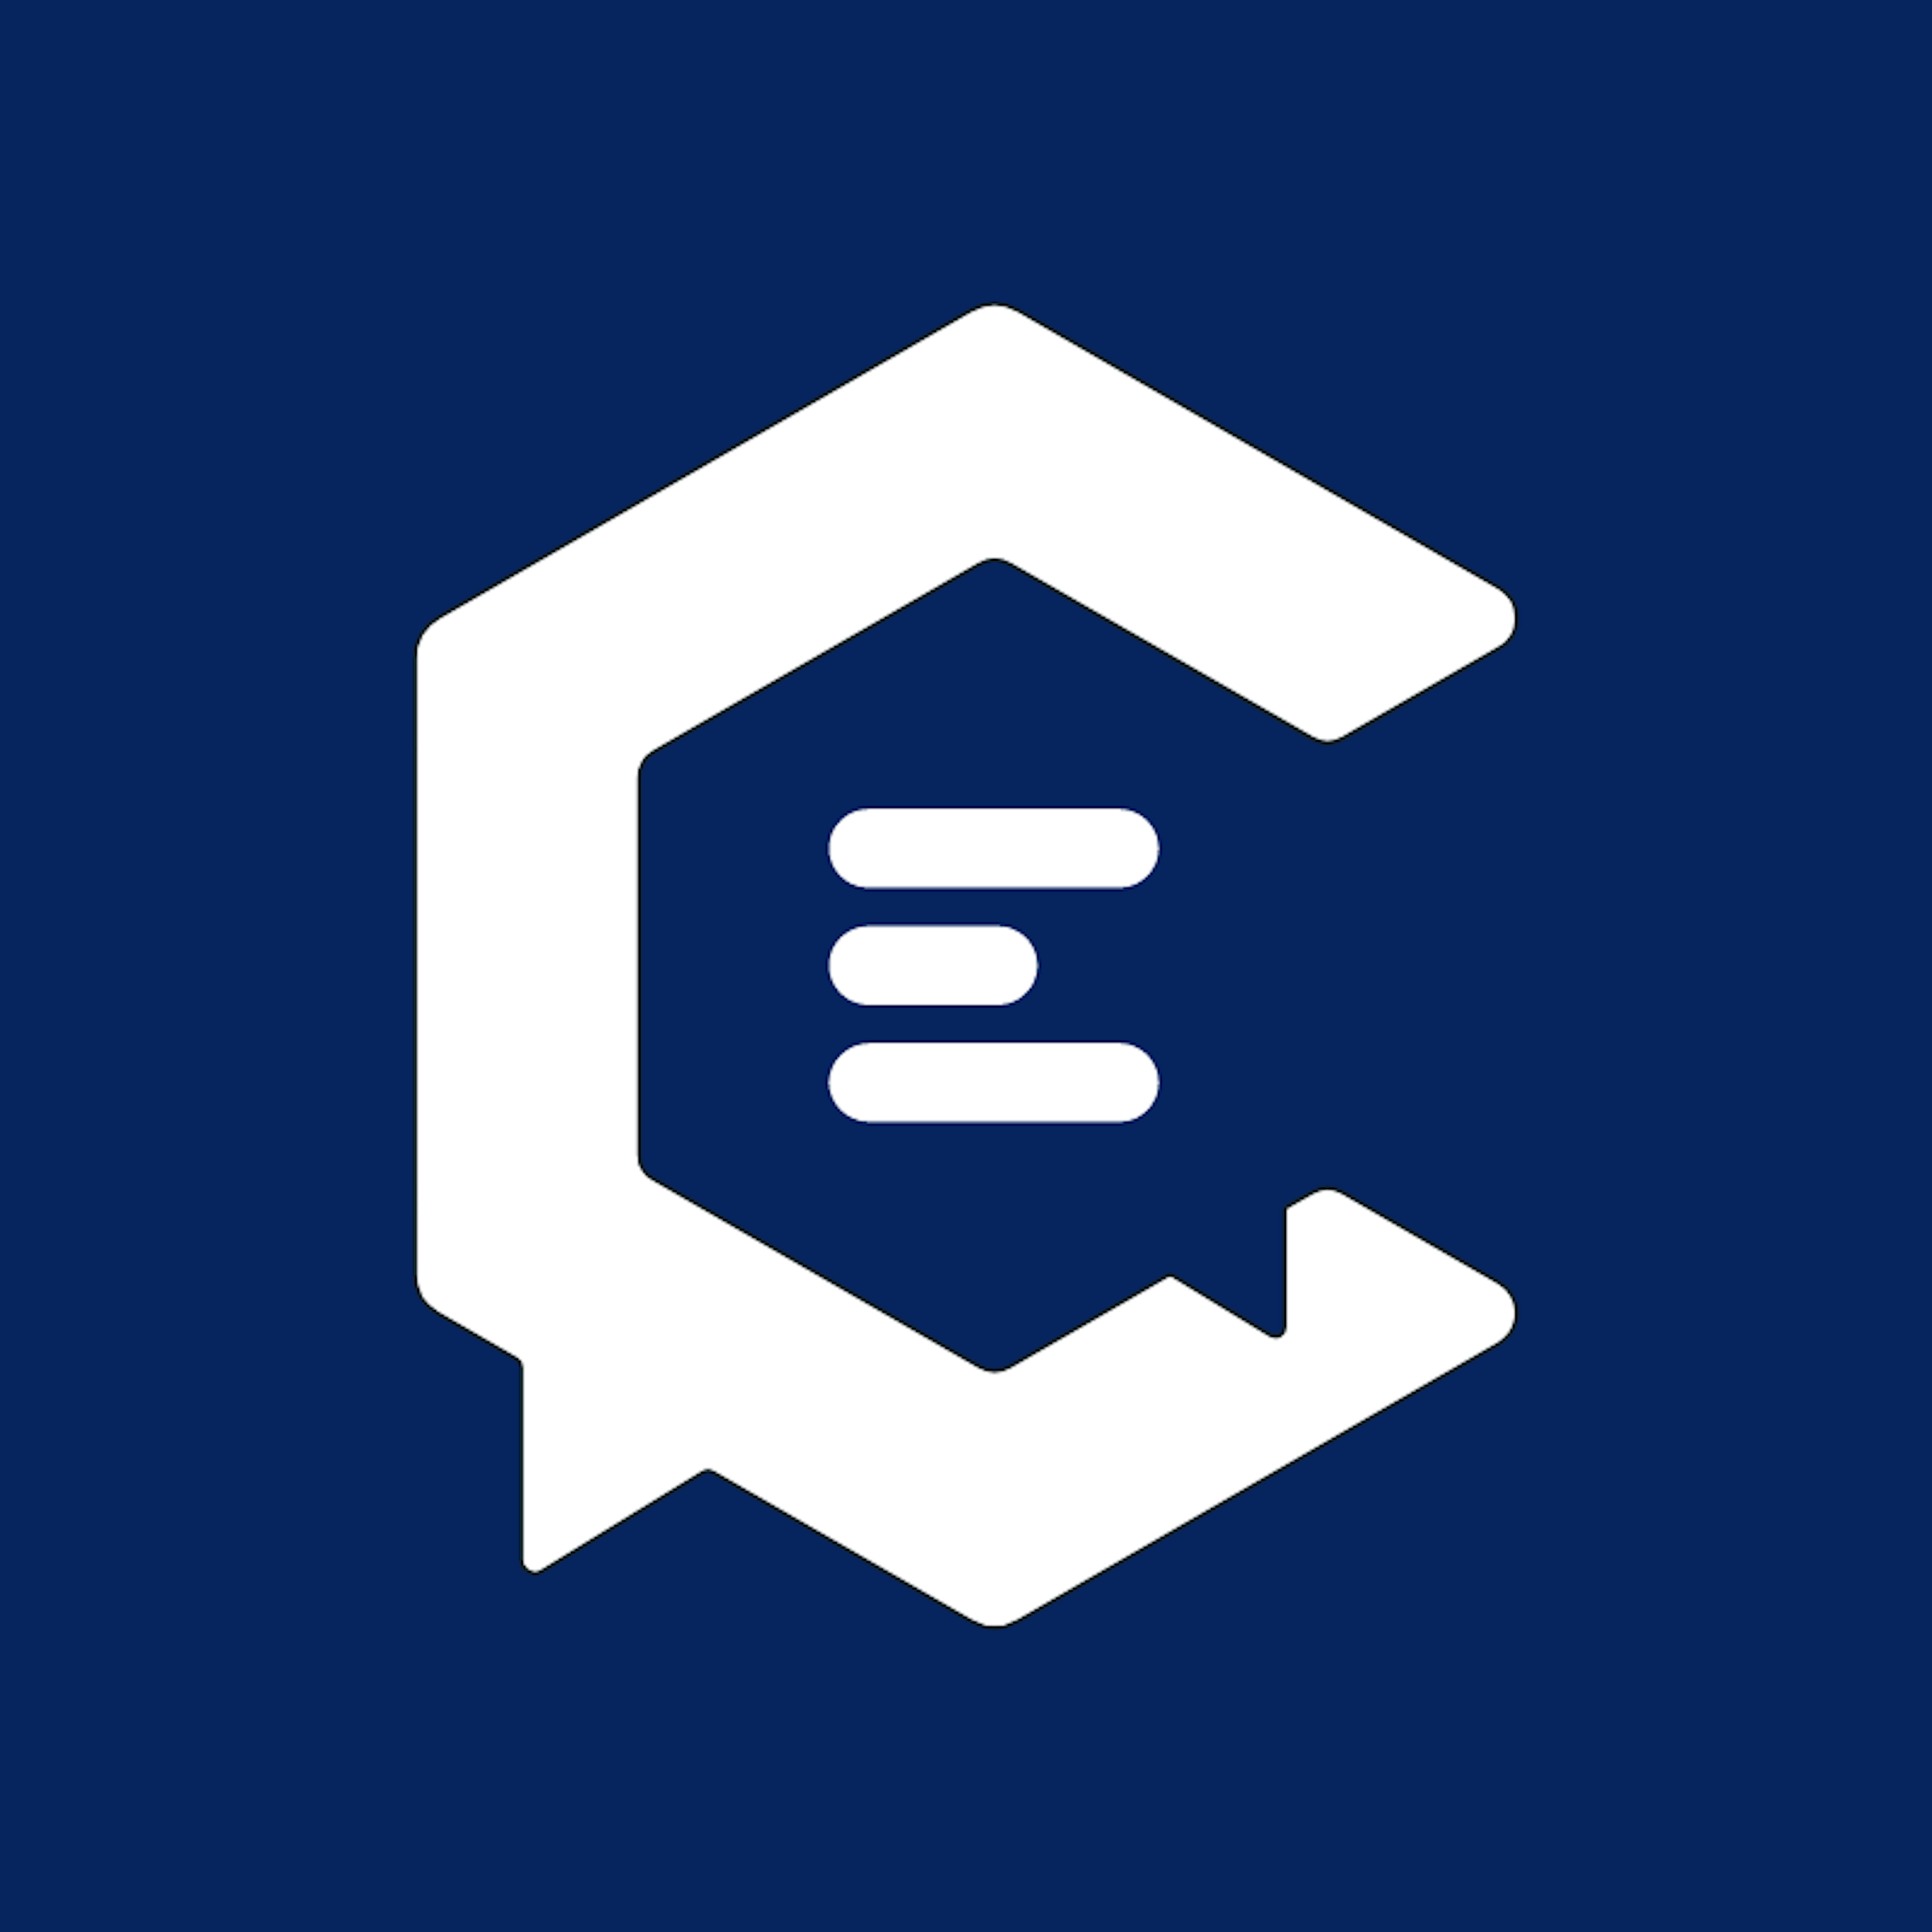 ClearVoice Logo